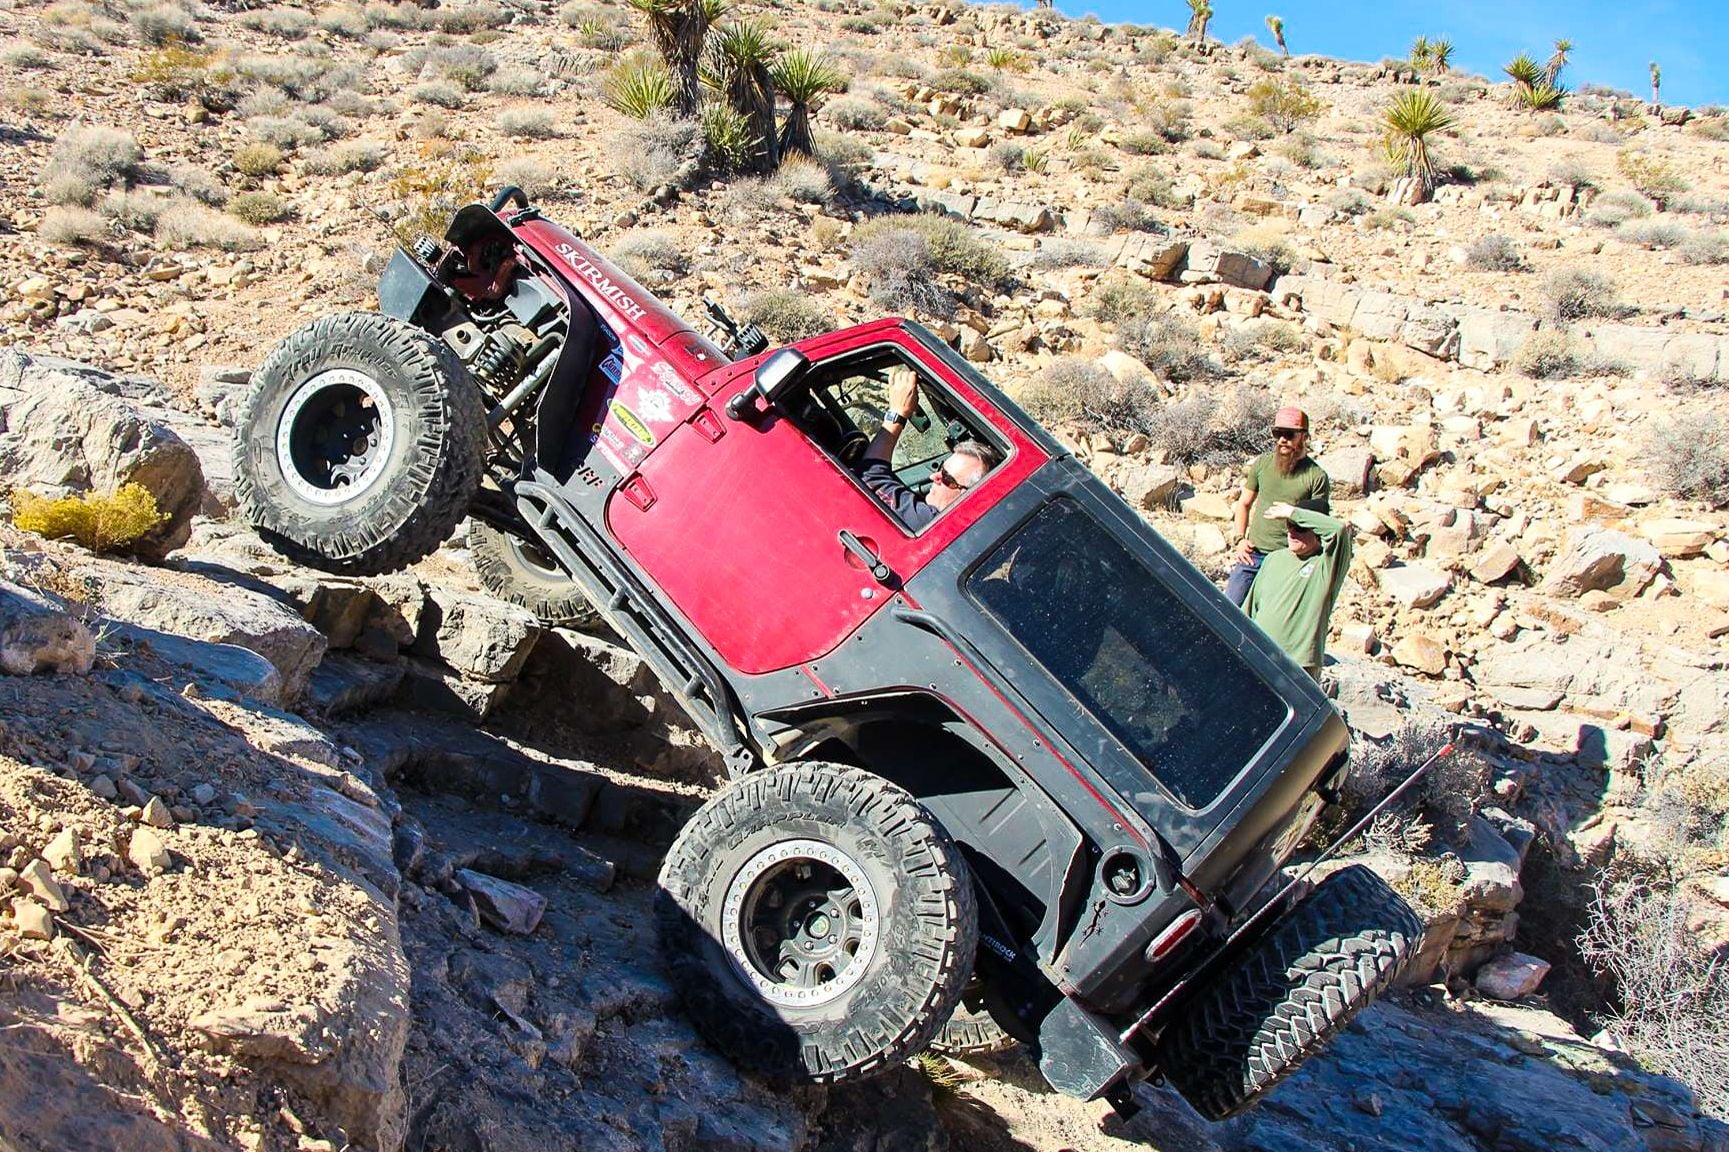 2012 Jeep Wrangler - 2012 JK Fully Built Rock Crawler - Used - VIN 1C4AJWAG3CL102248 - 60,500 Miles - 6 cyl - 4WD - Manual - SUV - Red - Las Vegas, NV 89178, United States